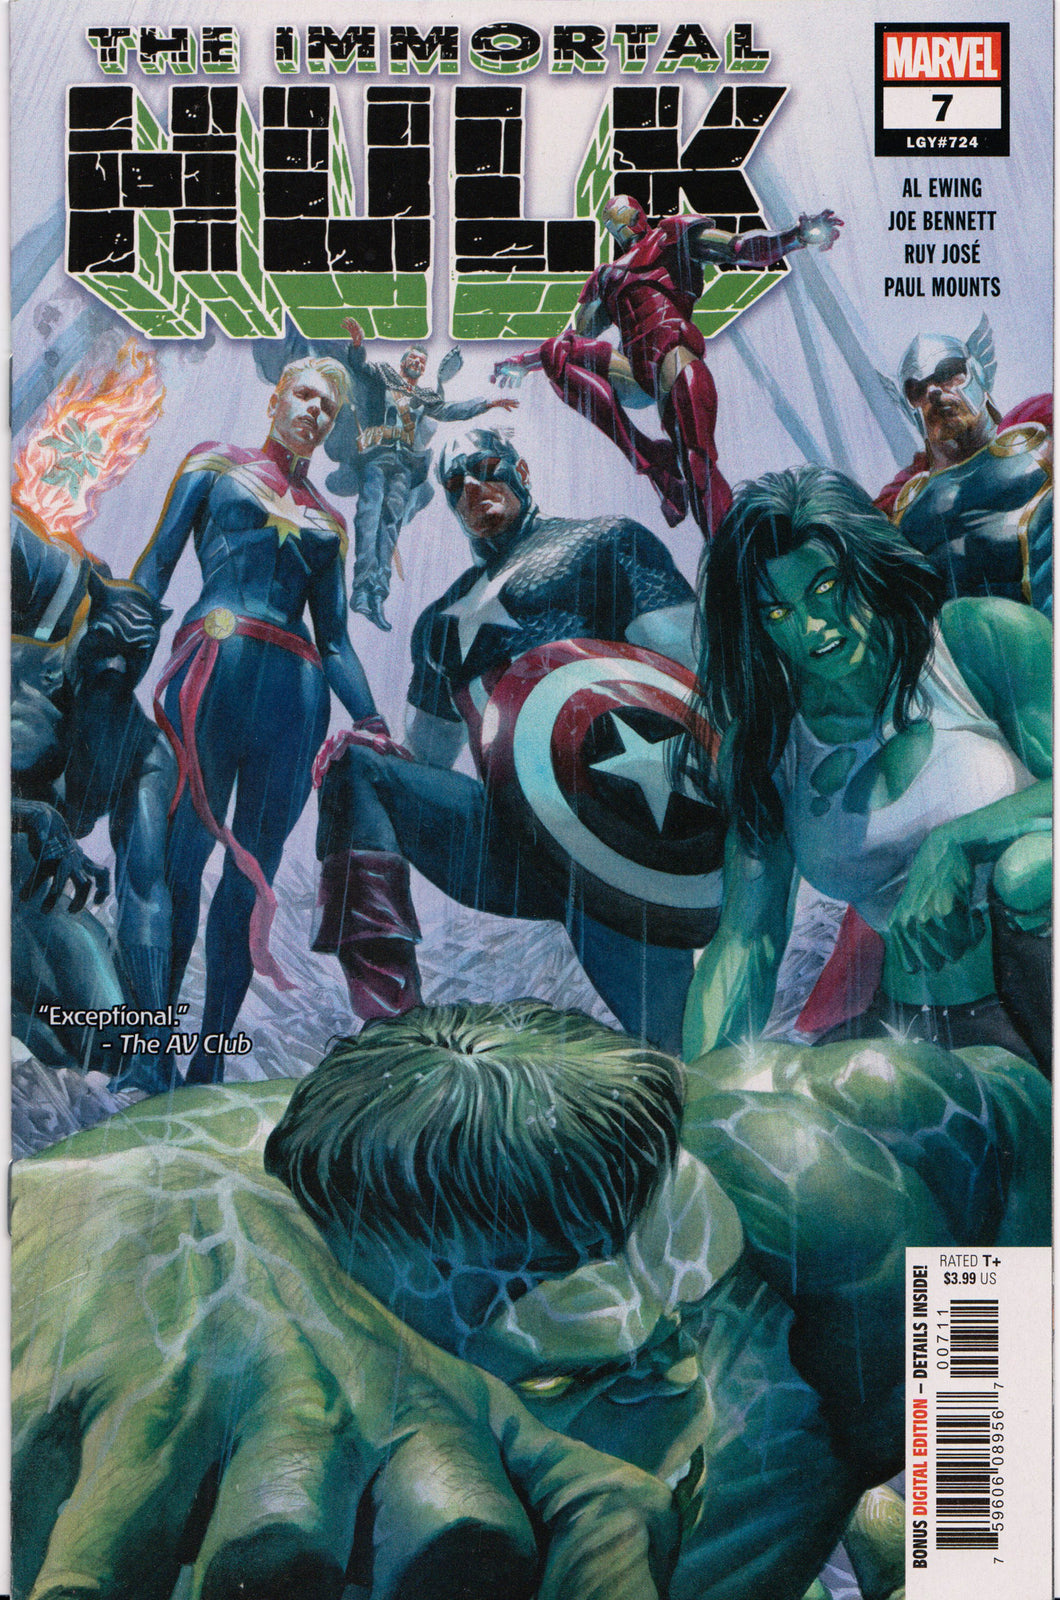 THE IMMORTAL HULK #7 COMIC BOOK ~ Marvel Comics